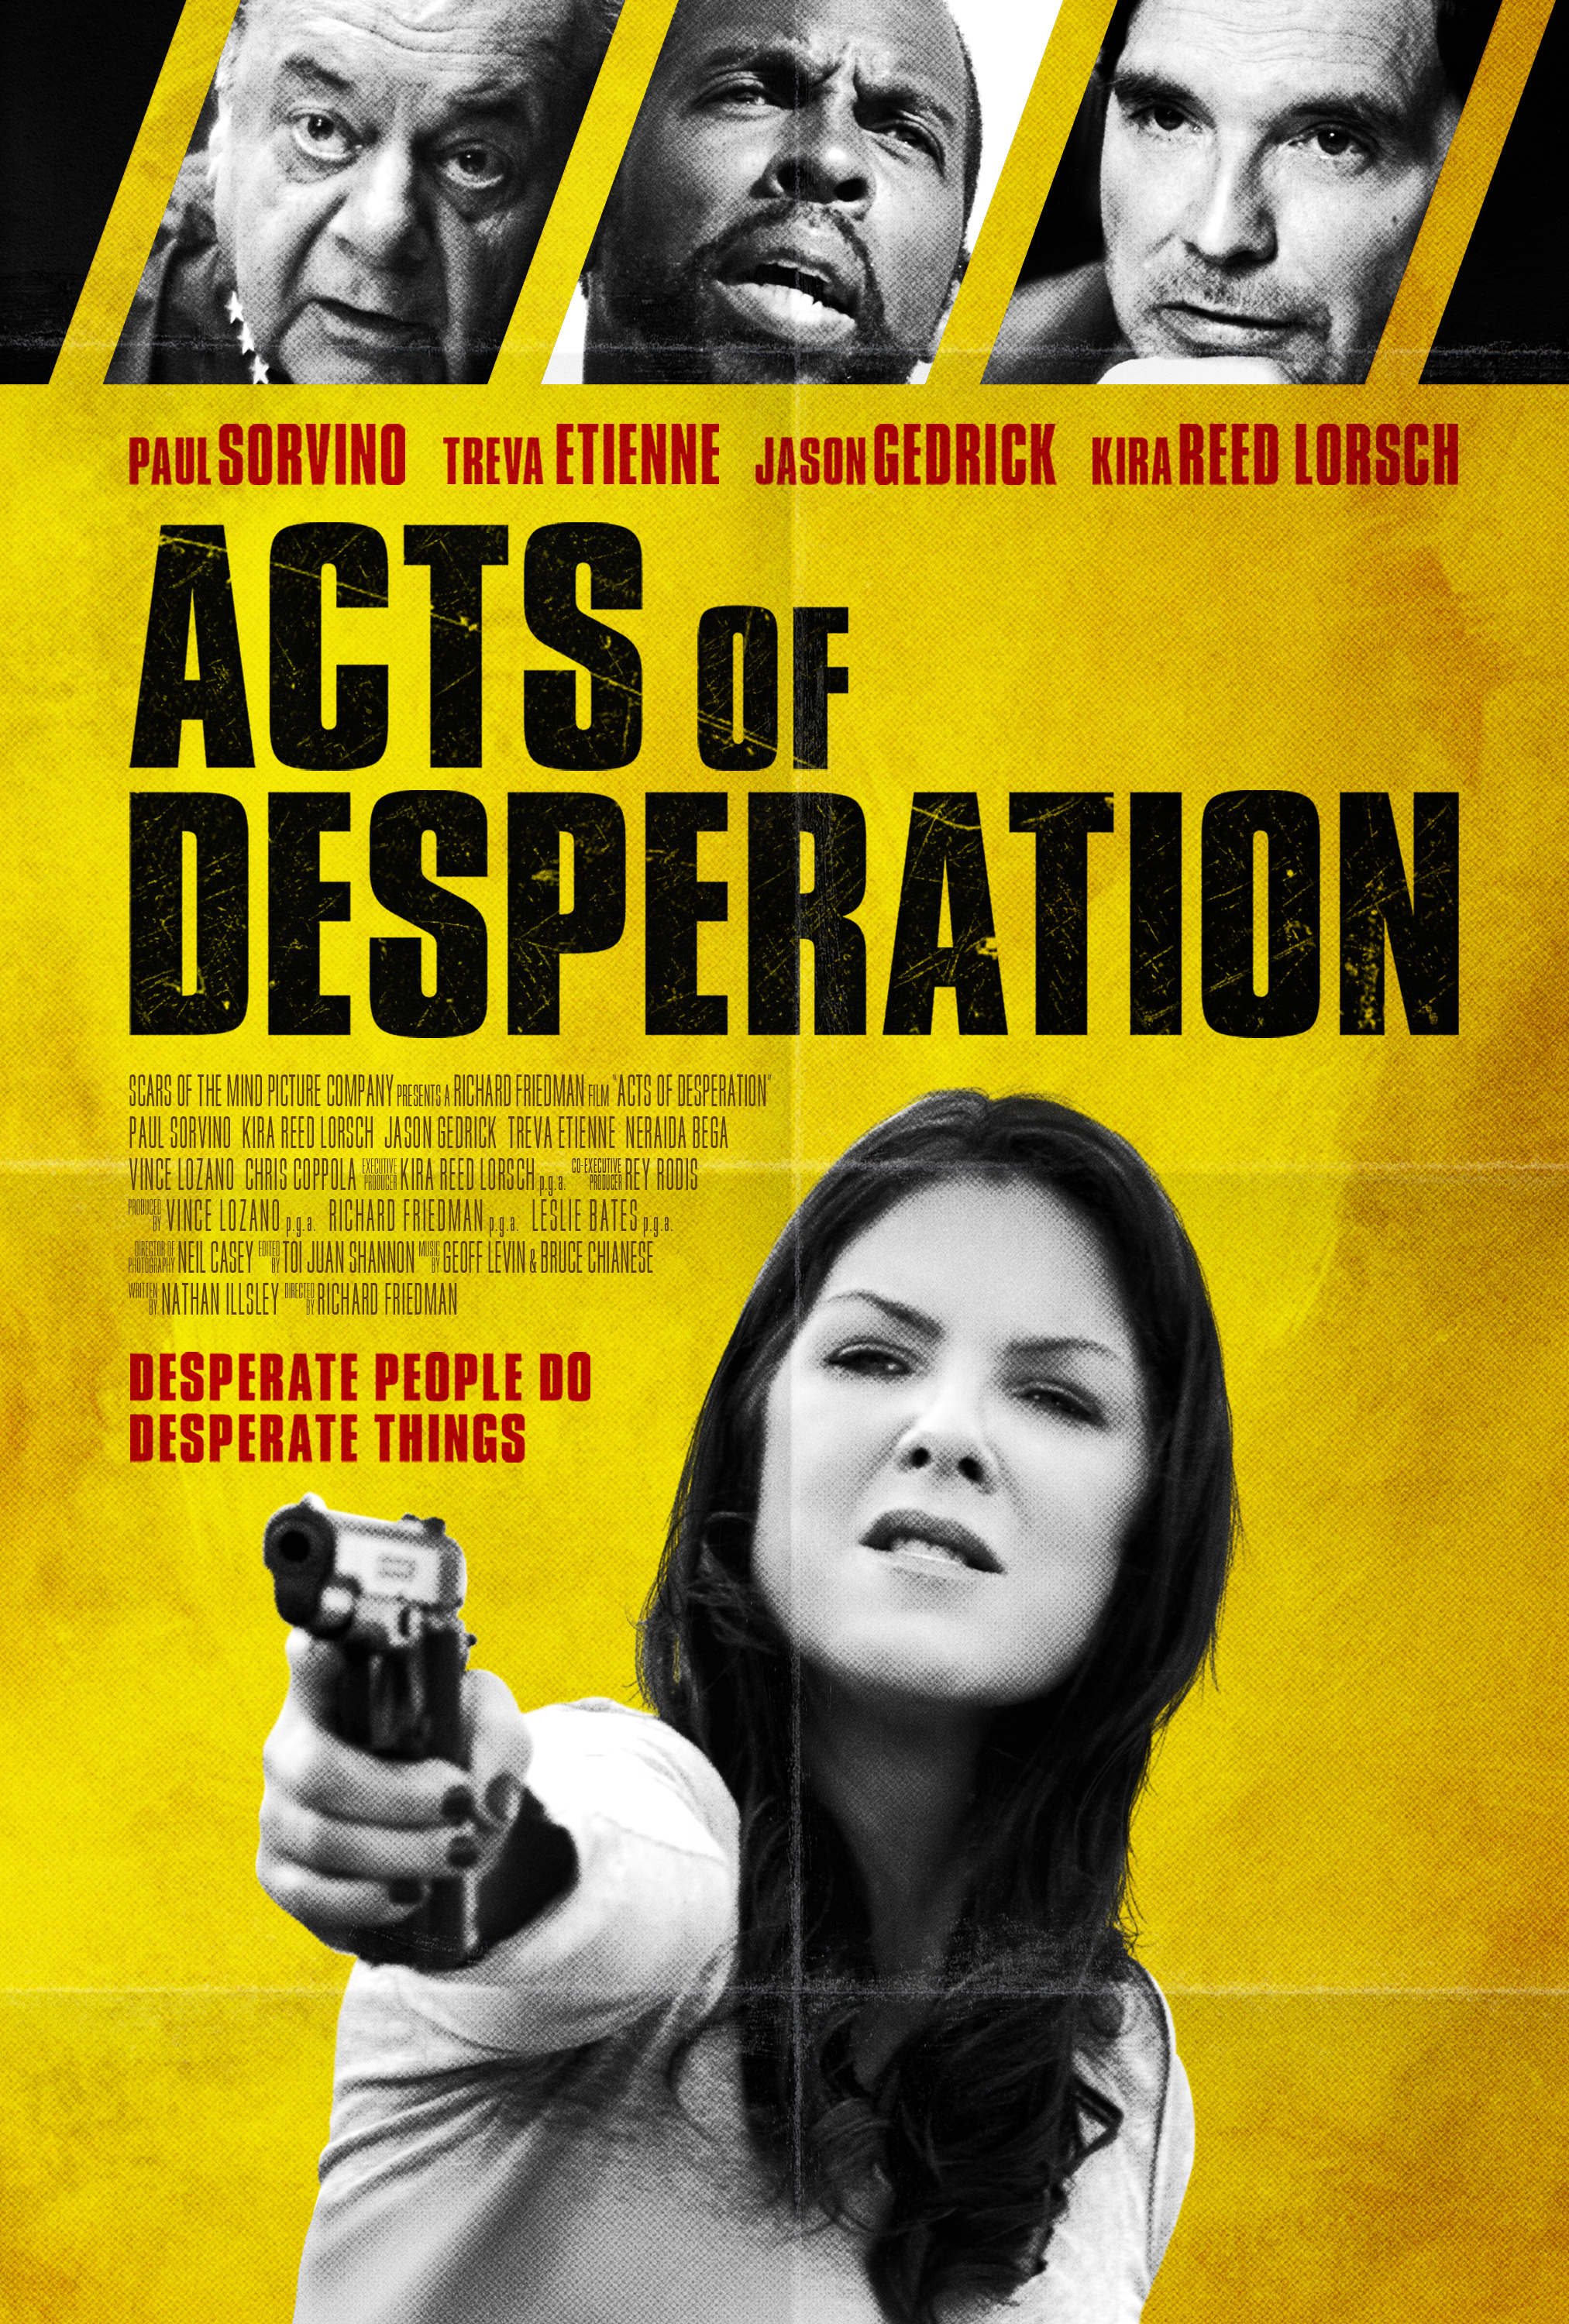 Nonton film Acts of Desperation layarkaca21 indoxx1 ganool online streaming terbaru